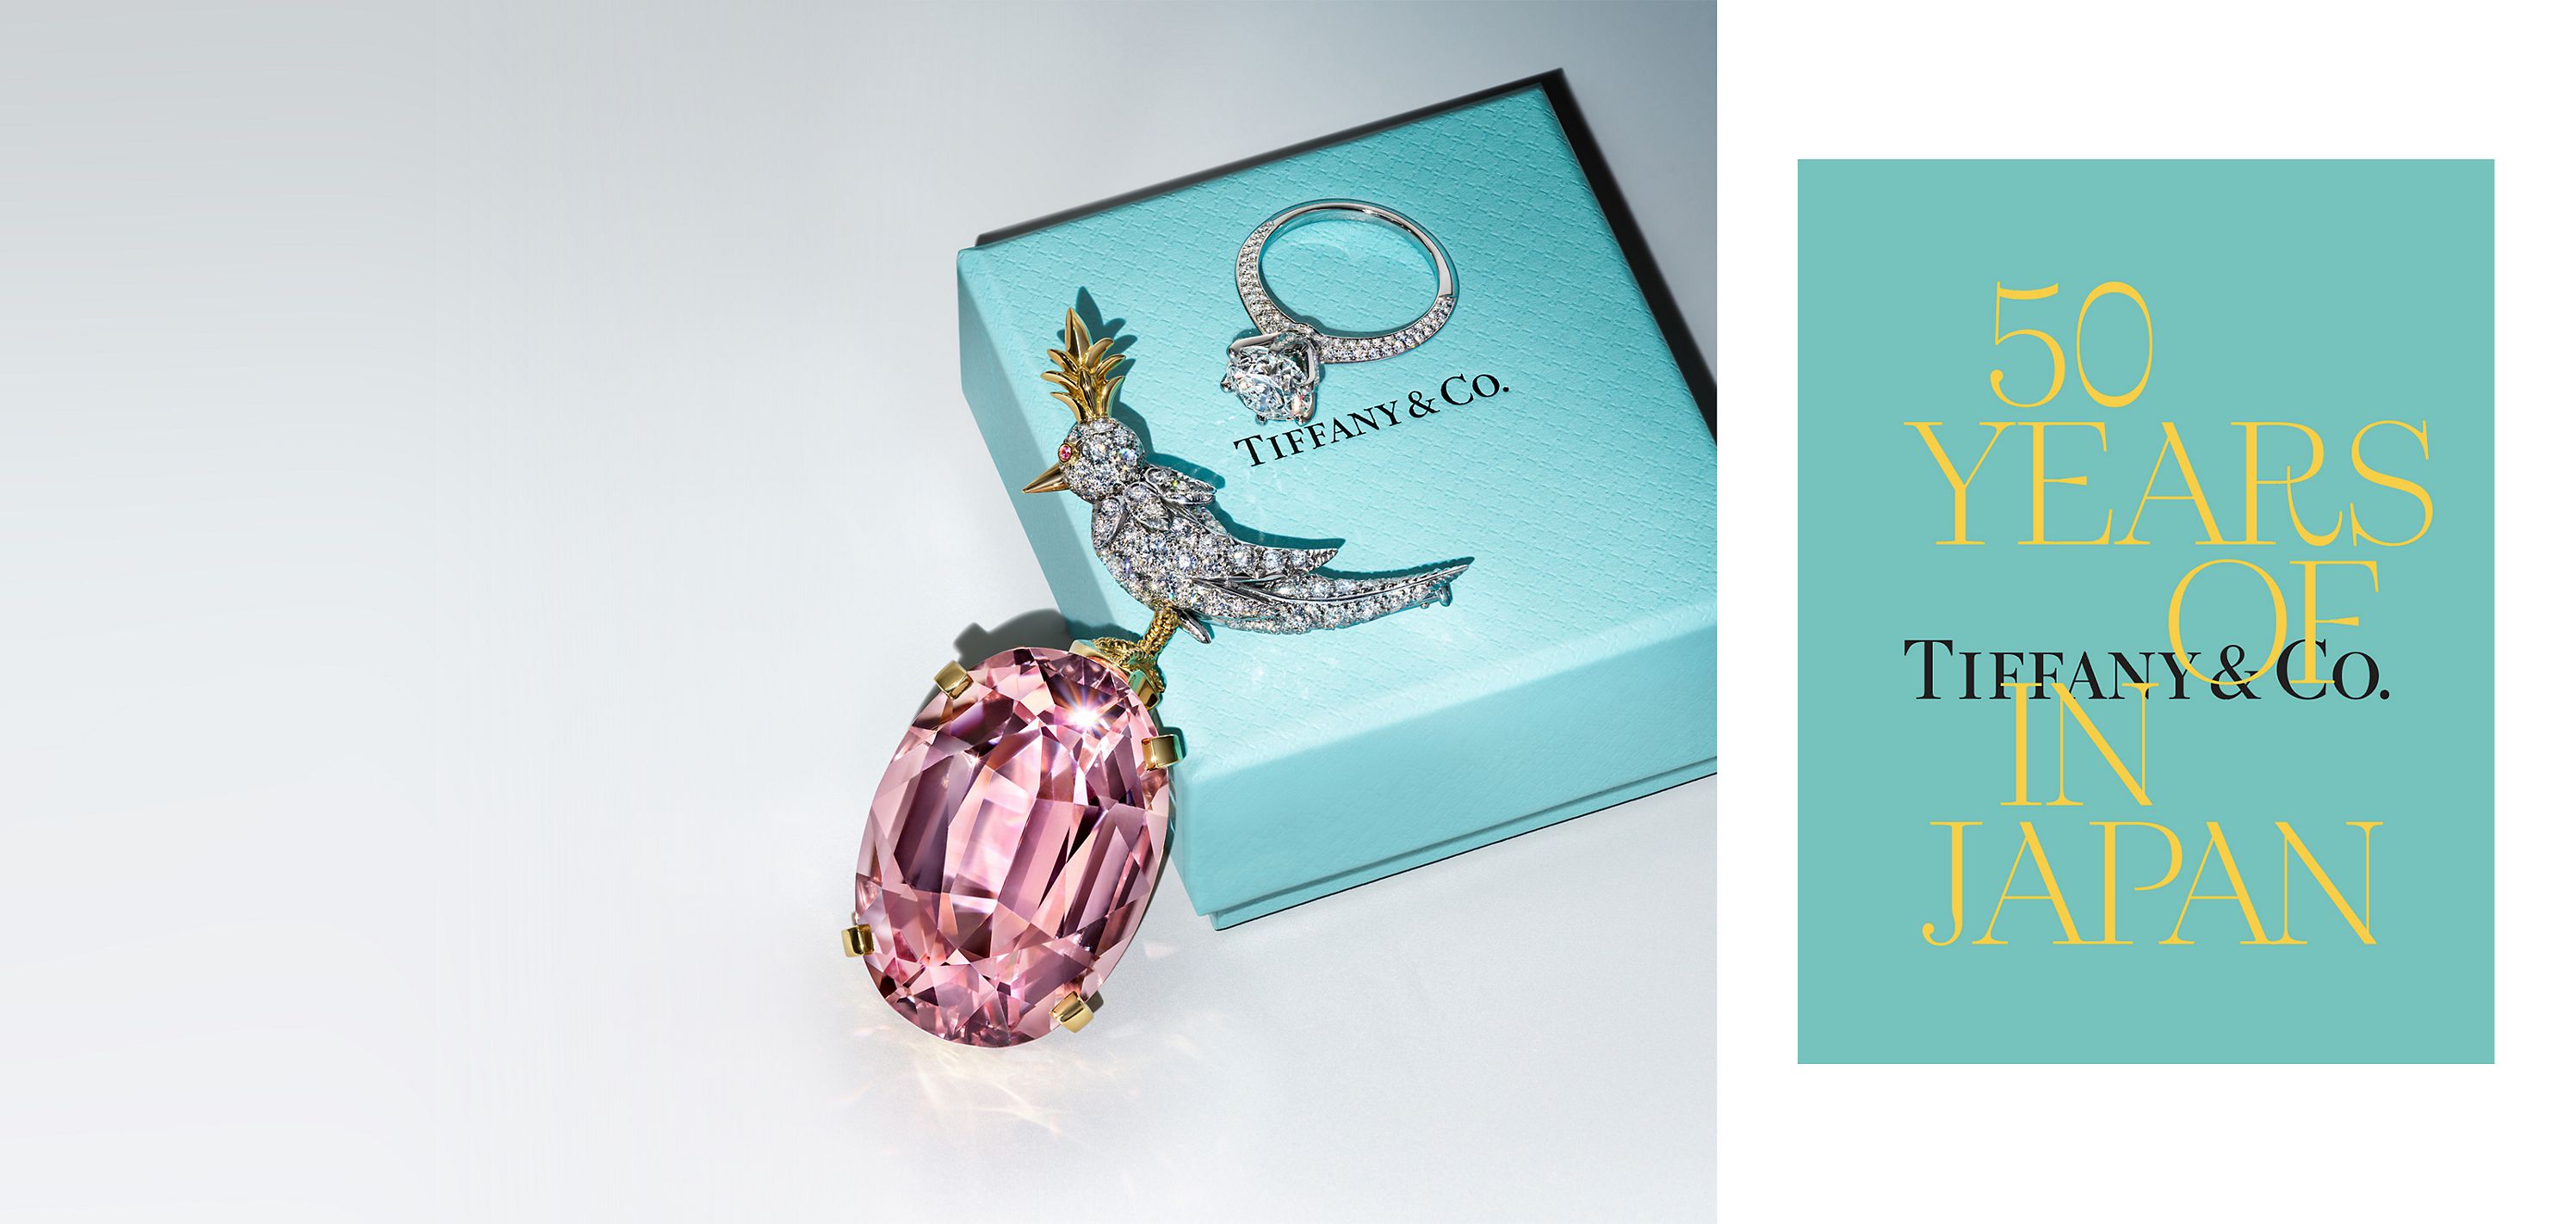 Celebrating 50 Years of Tiffany & Co. in Japan | Tiffany & Co.